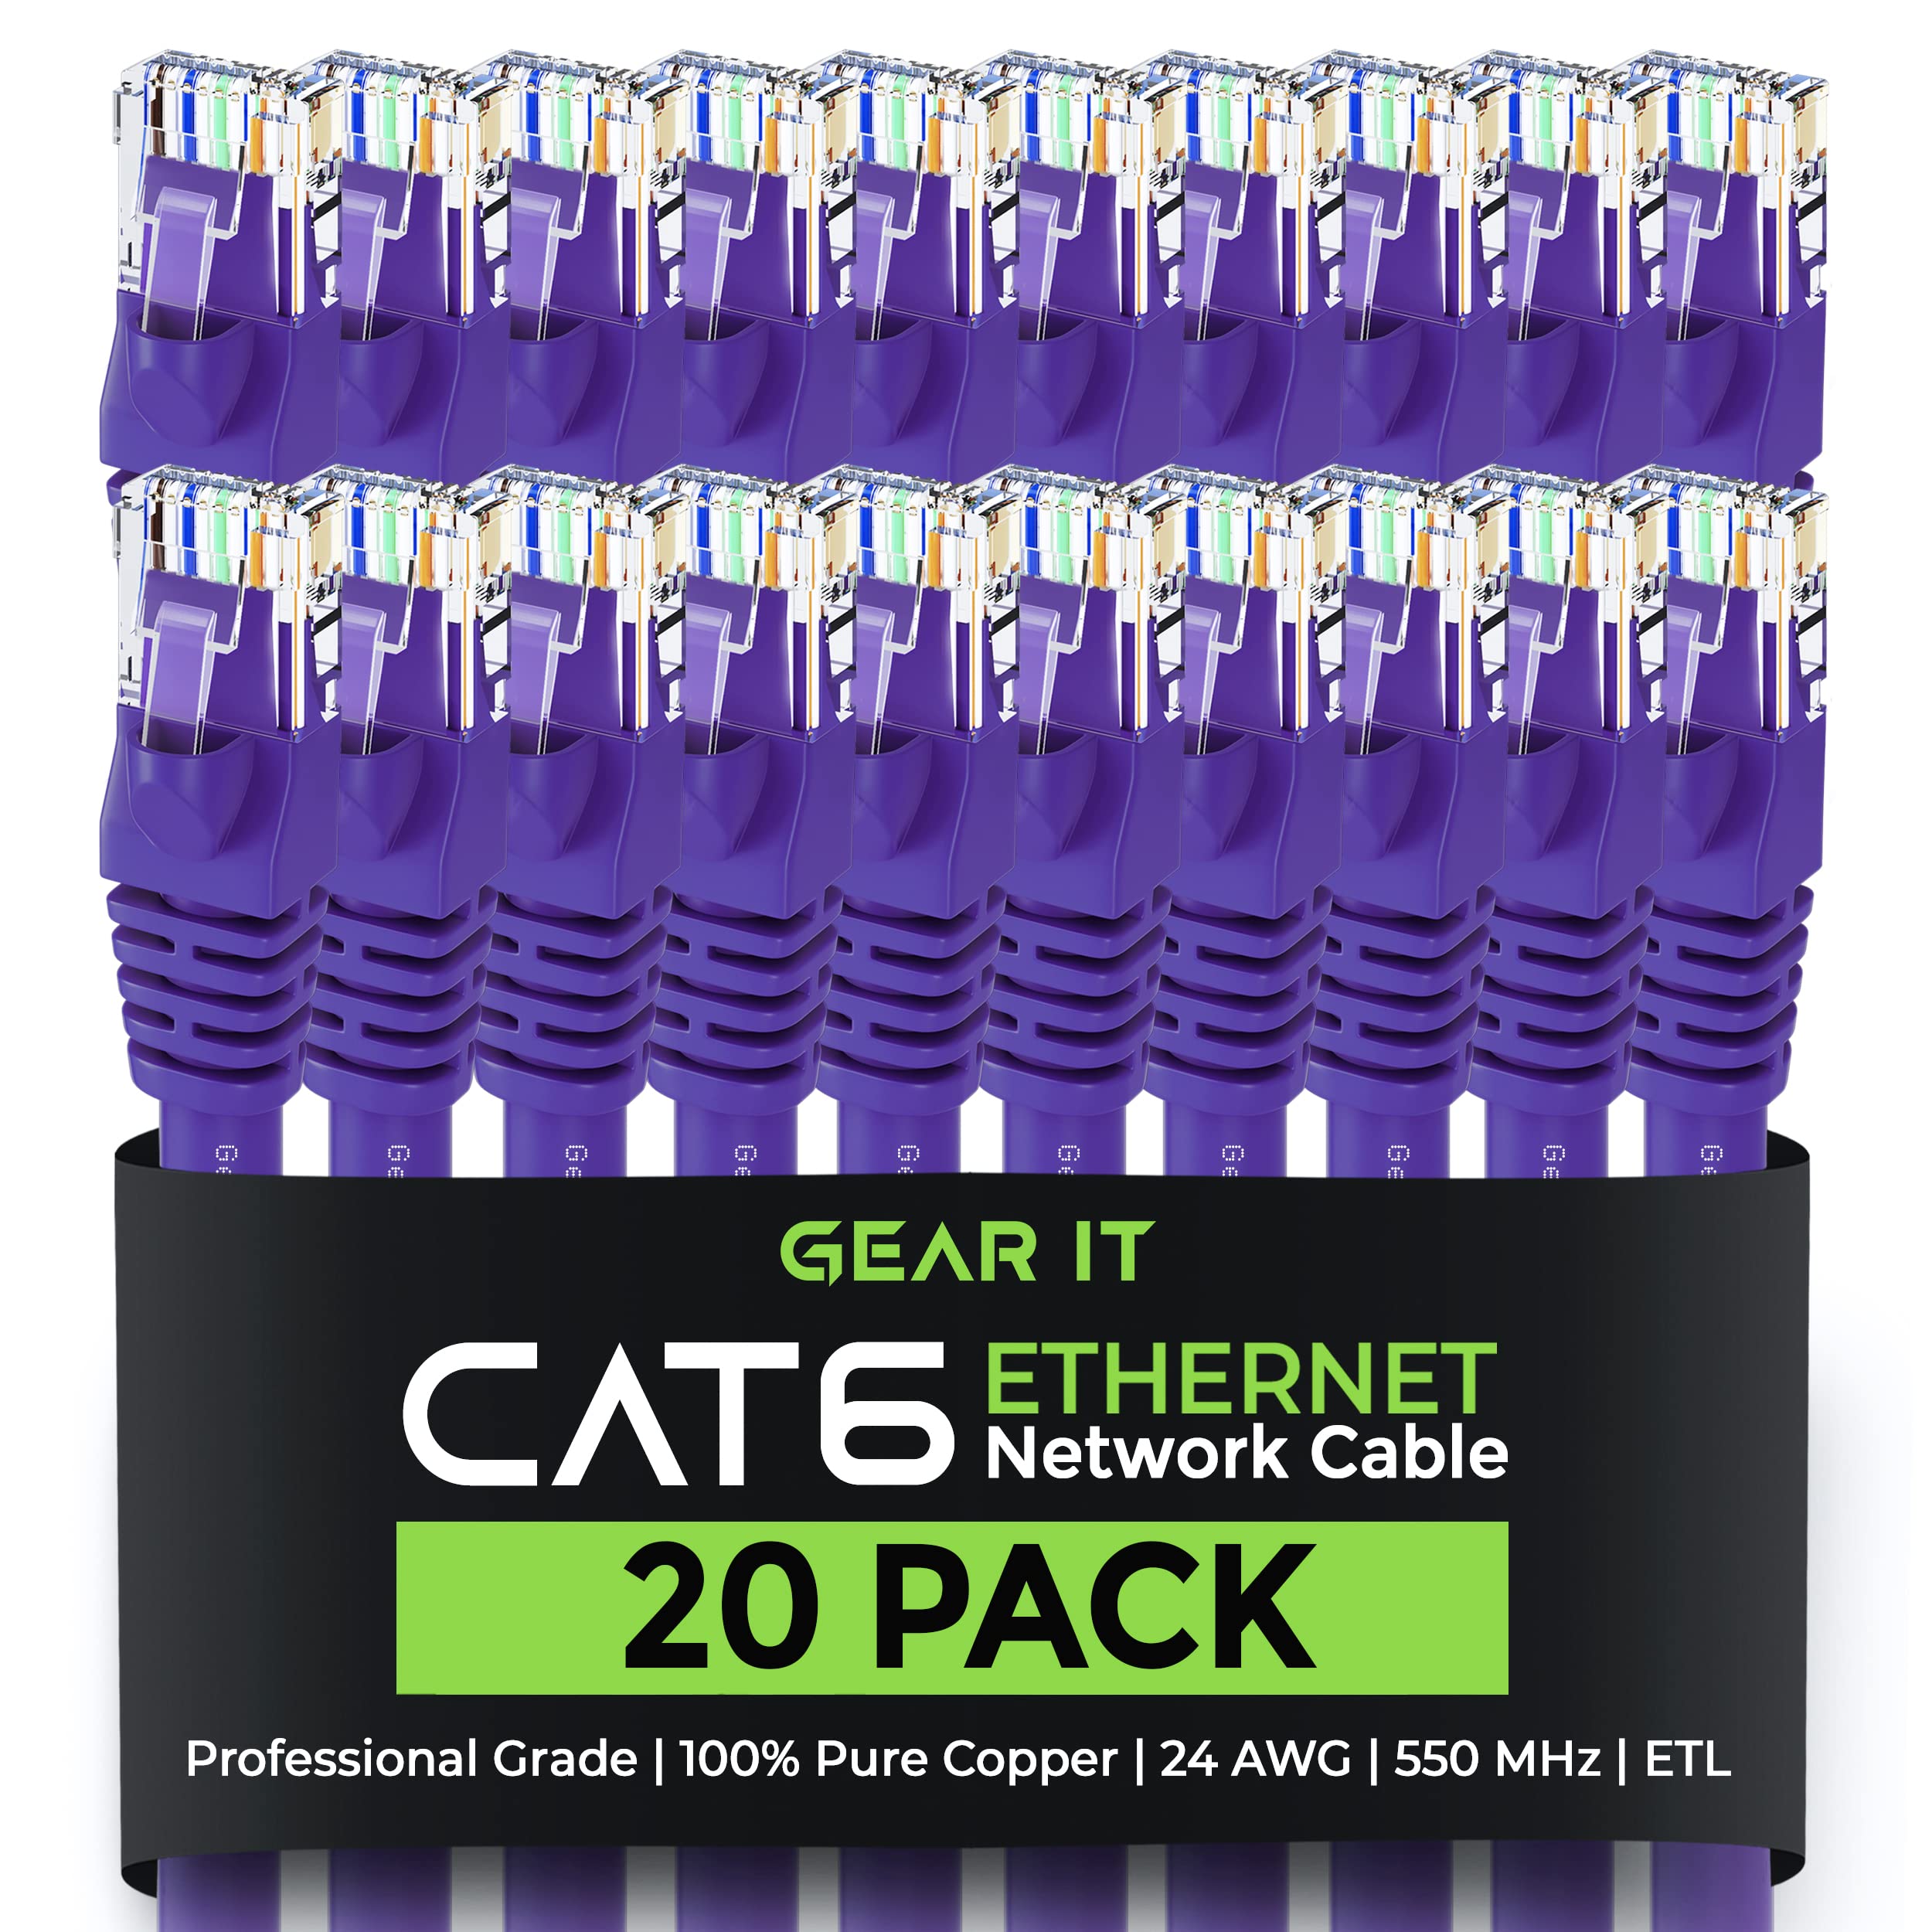 GearIT Cat 6 Ethernet Cable 1 ft (20-Pack) - Cat6 Patch Cable, Cat 6 Patch Cable, Cat6 Cable, Cat 6 Cable, Cat6 Ethernet Cable, Network Cable, Internet Cable - Purple 1 Foot